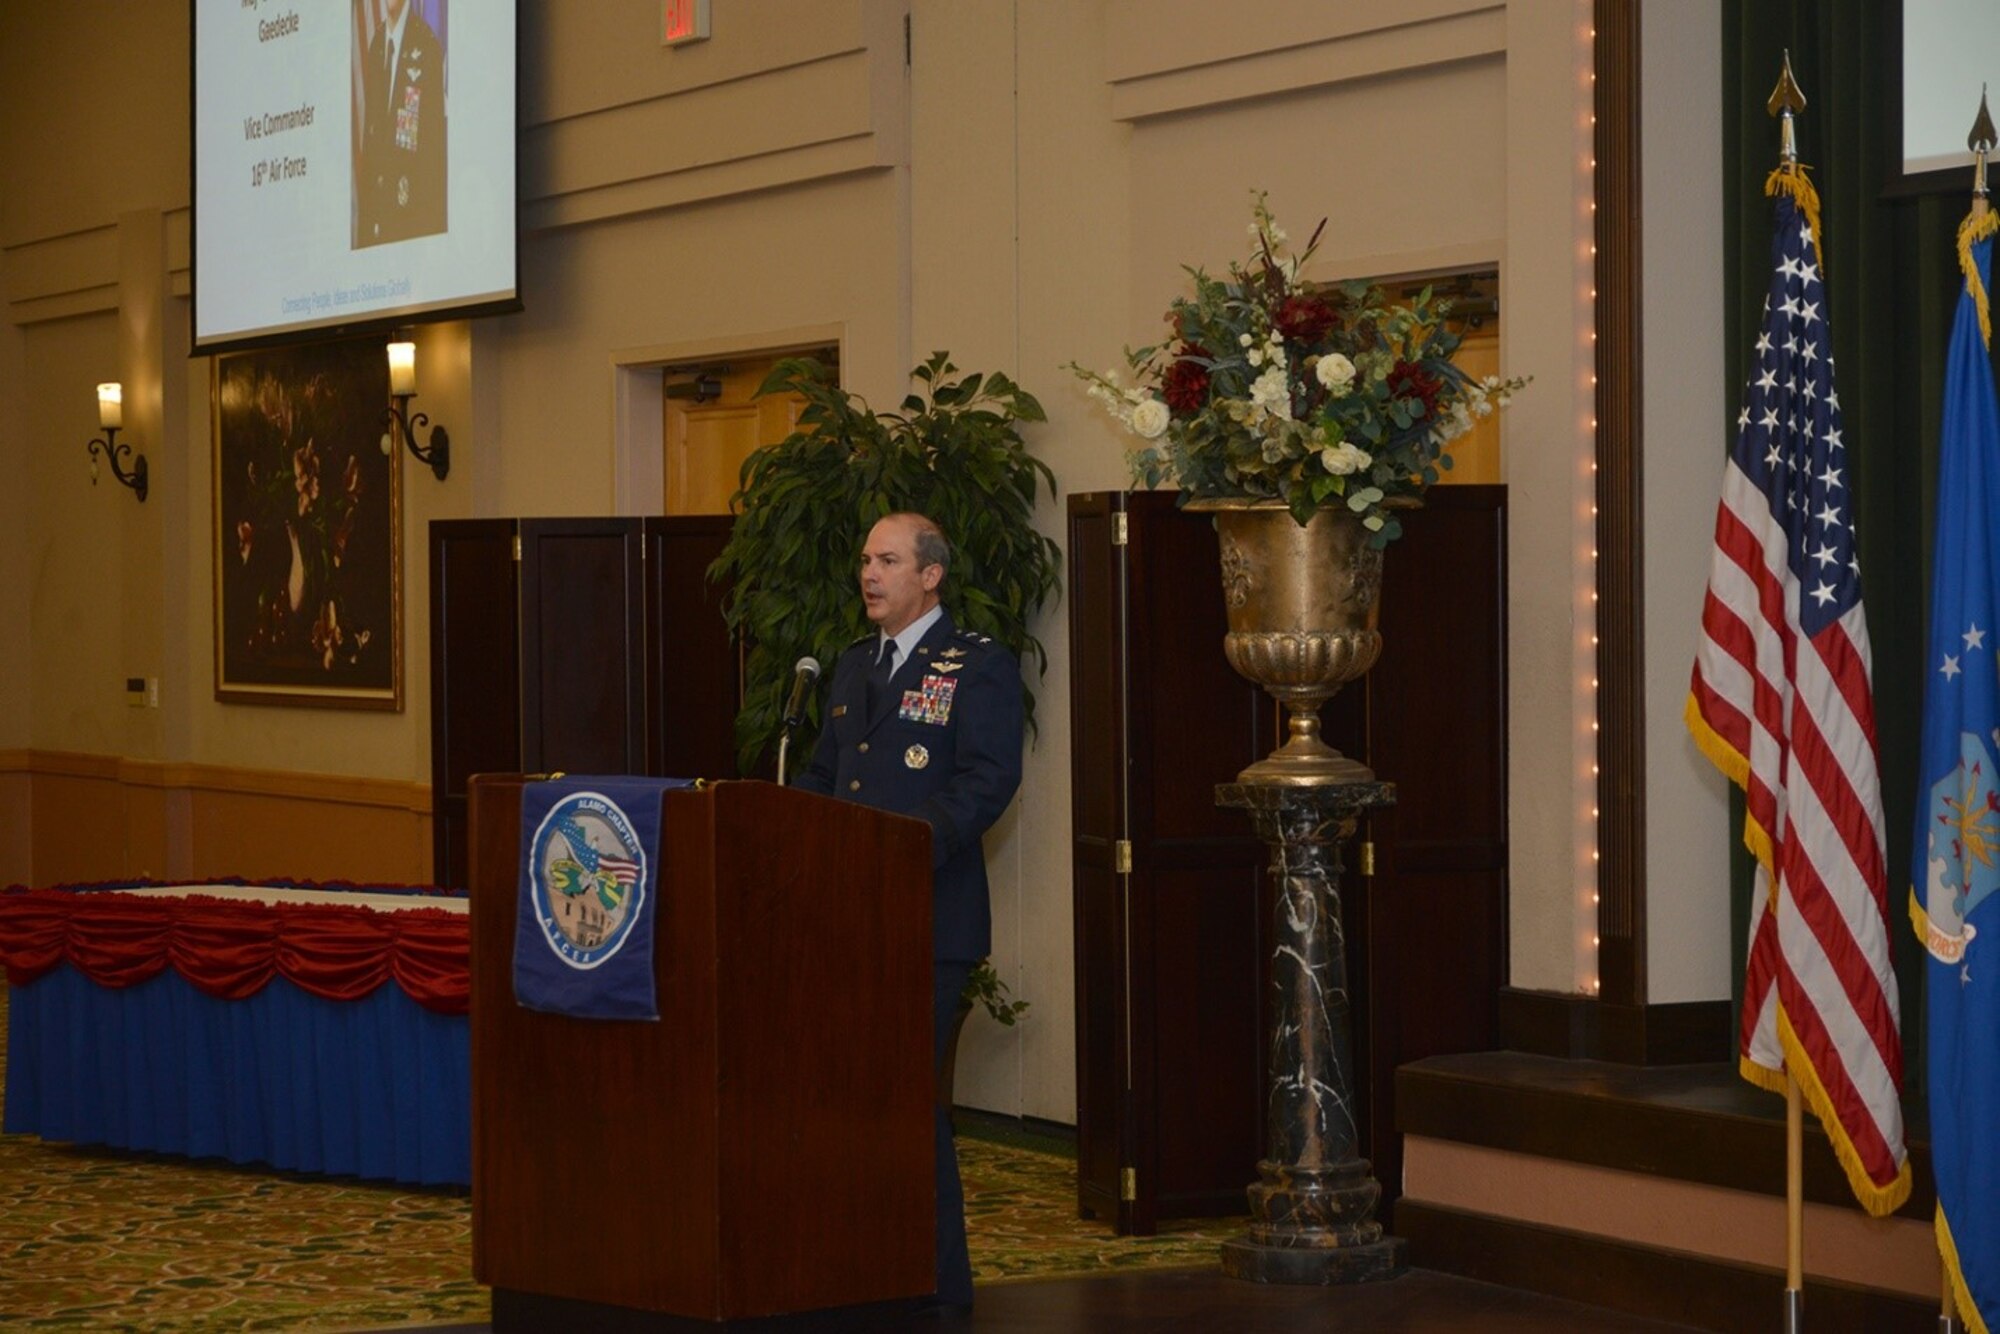 Maj. Gen. in official blues uniform speaks in front of a podium.